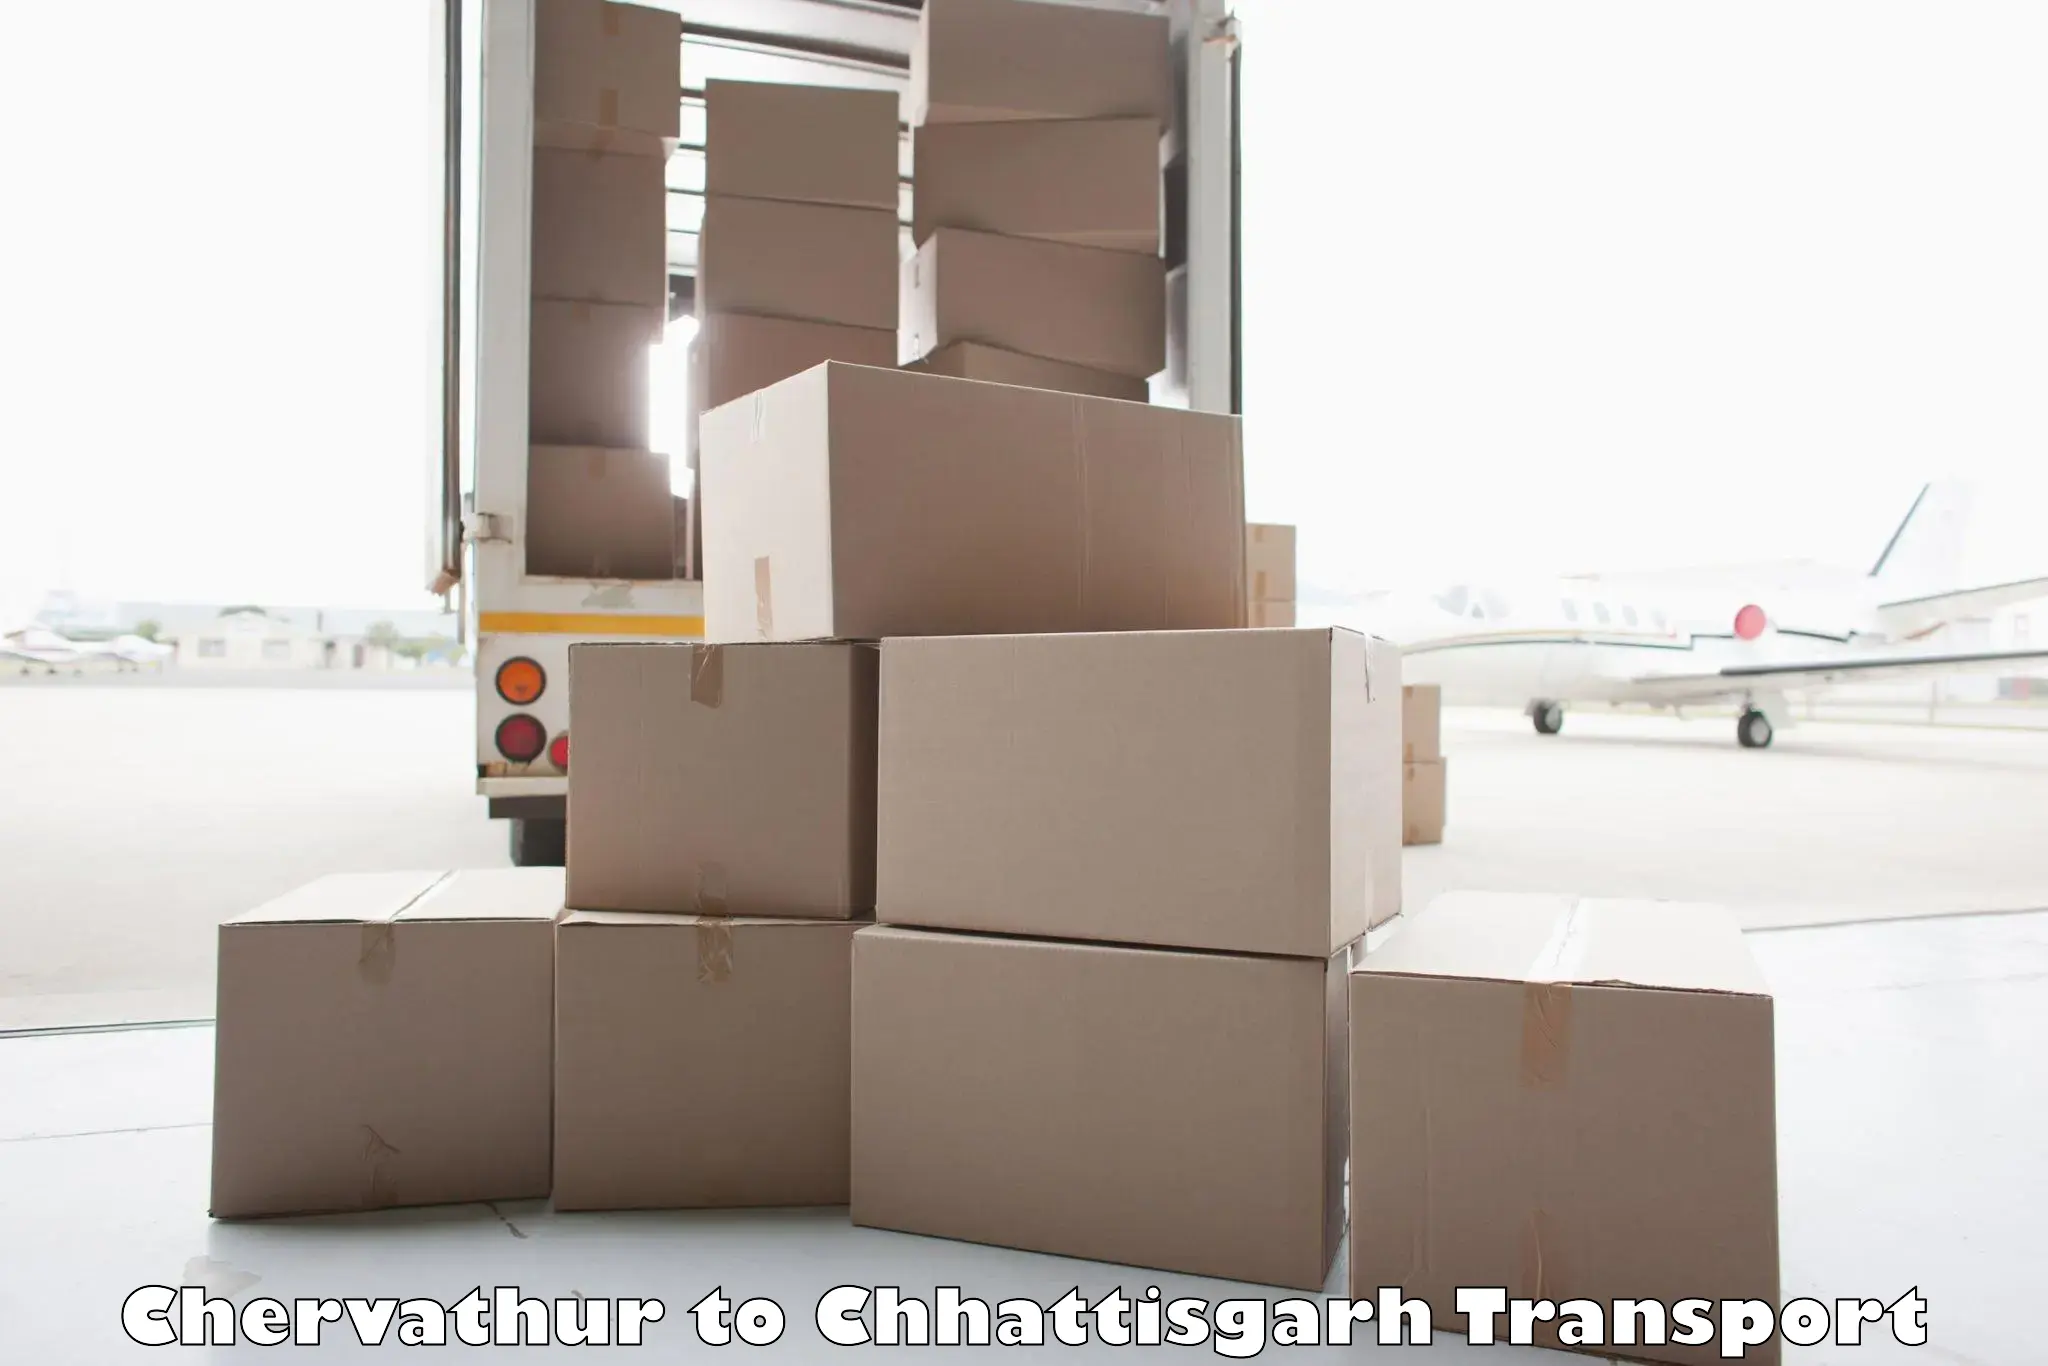 Commercial transport service Chervathur to Kharsia